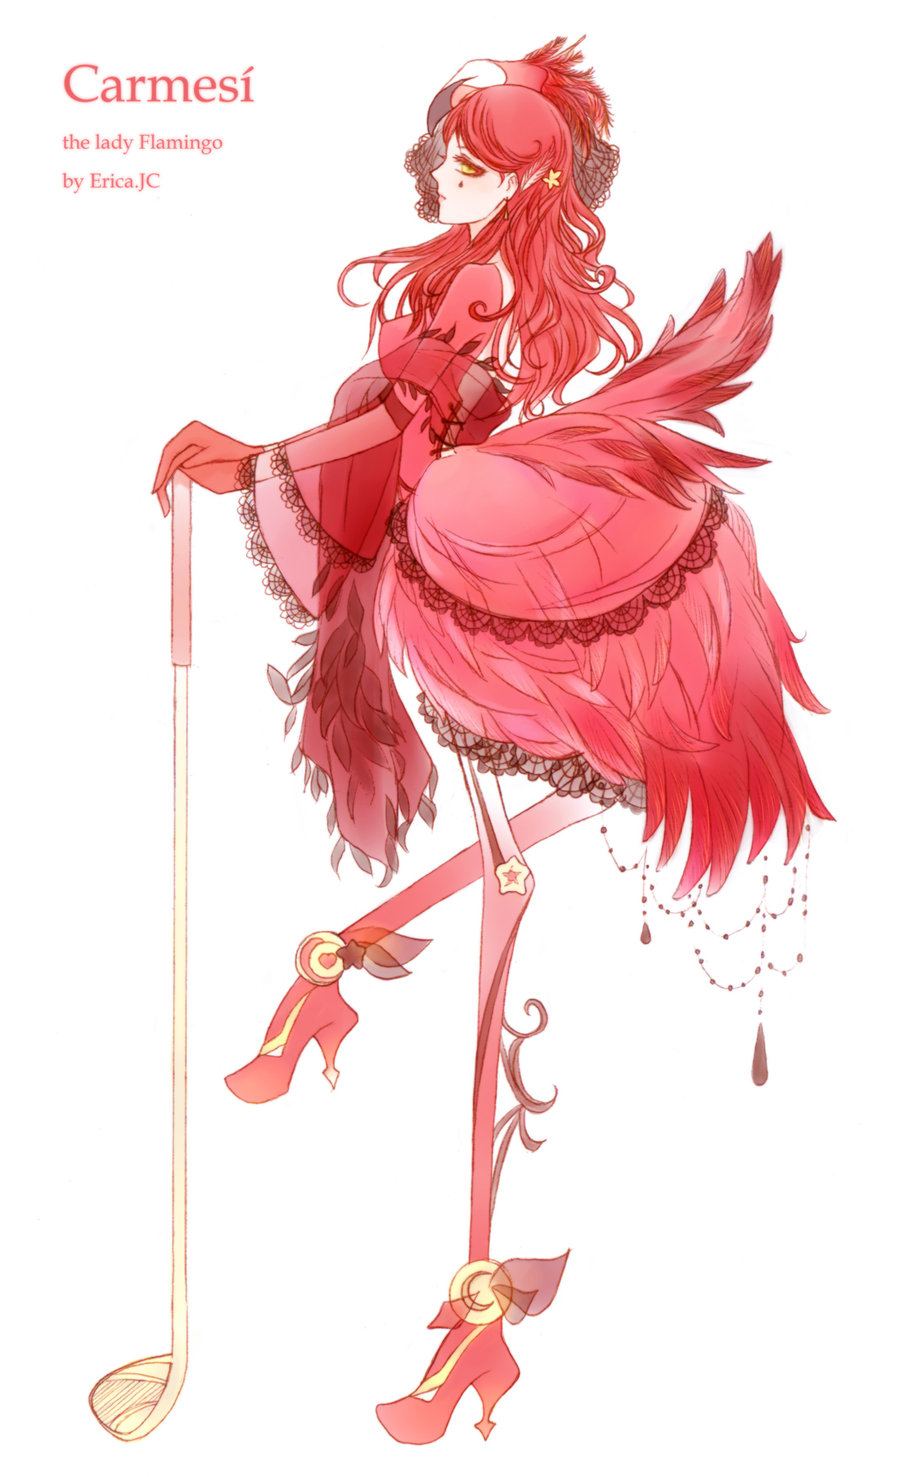 Oc carmesi the flamingo lady pink version by ericajc-d4xtv5g.jpg